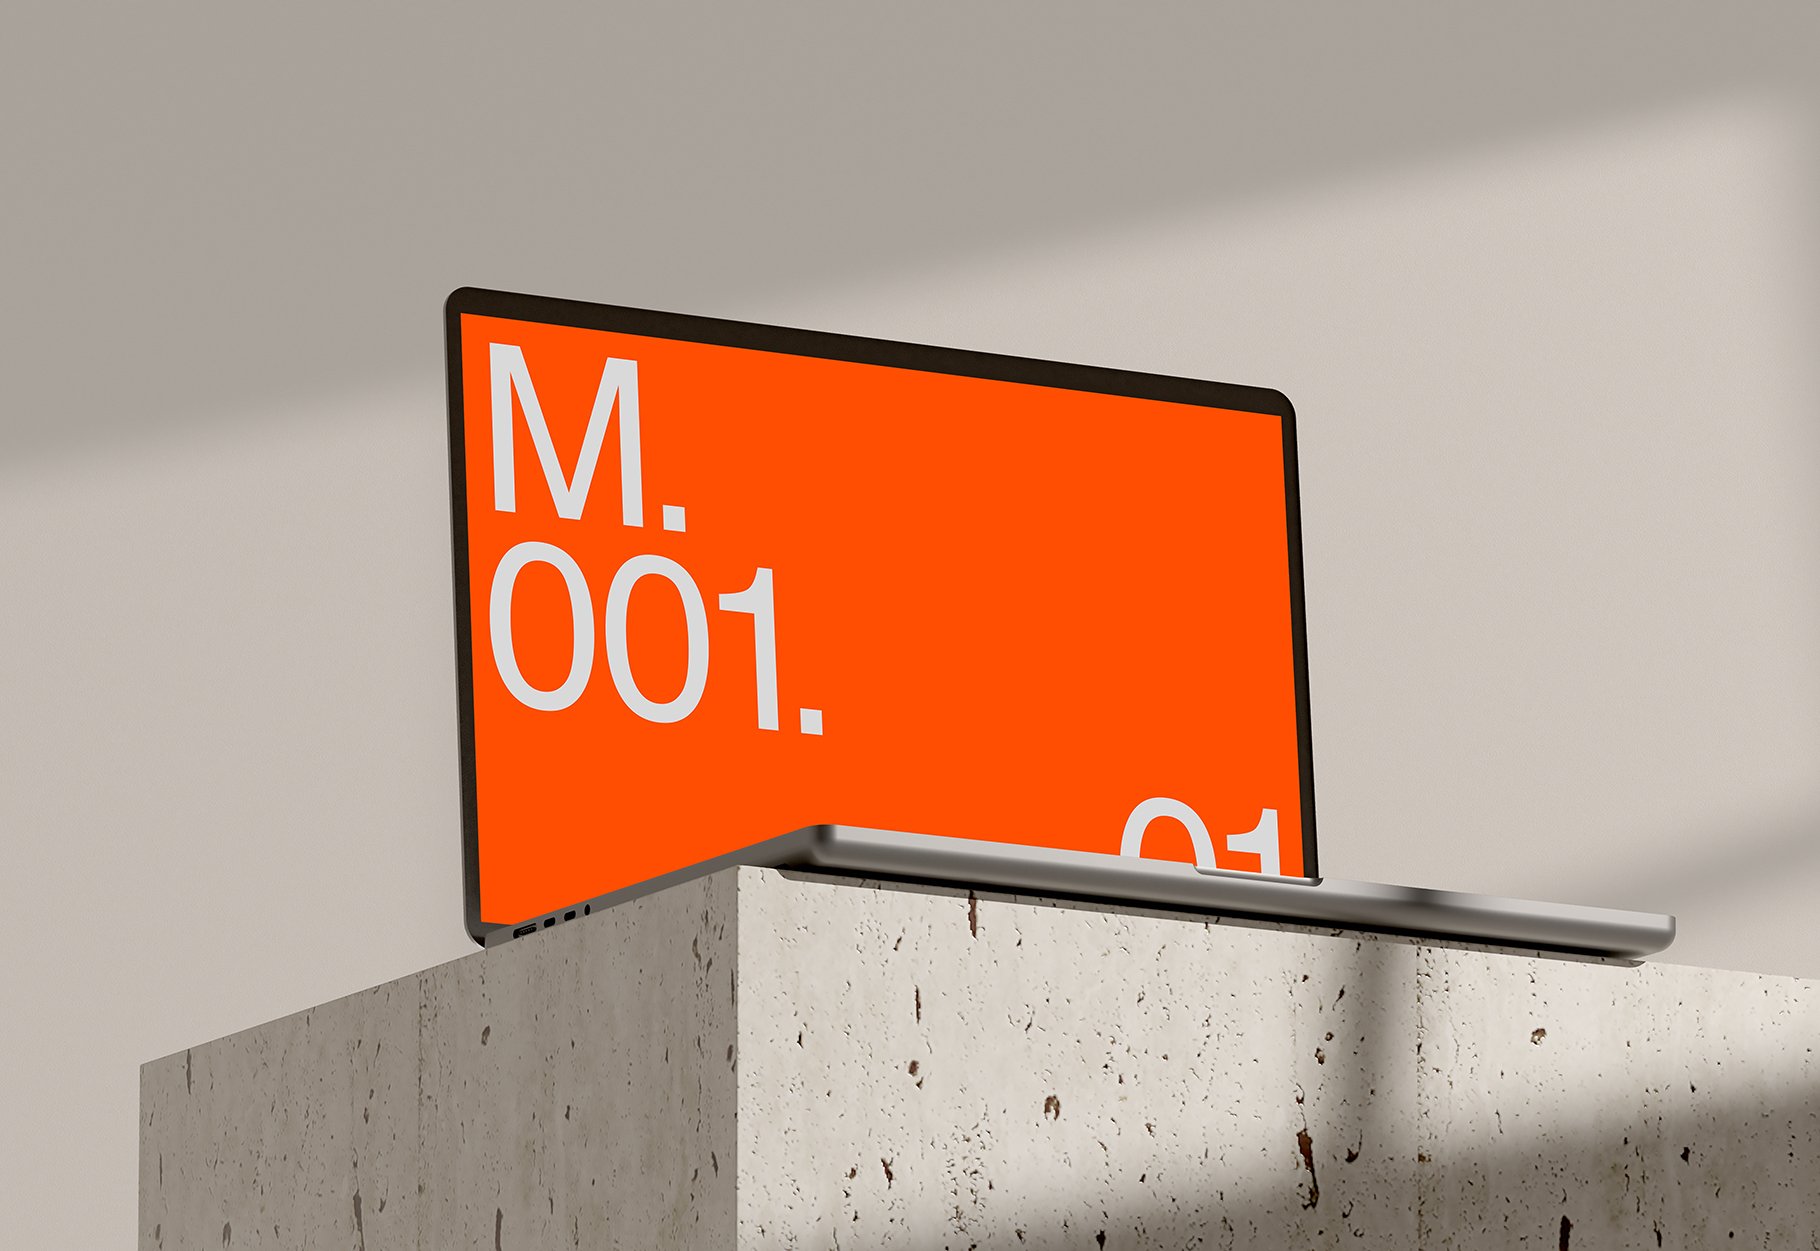 M.001.01 — MacBook Pro Mockup cover image.